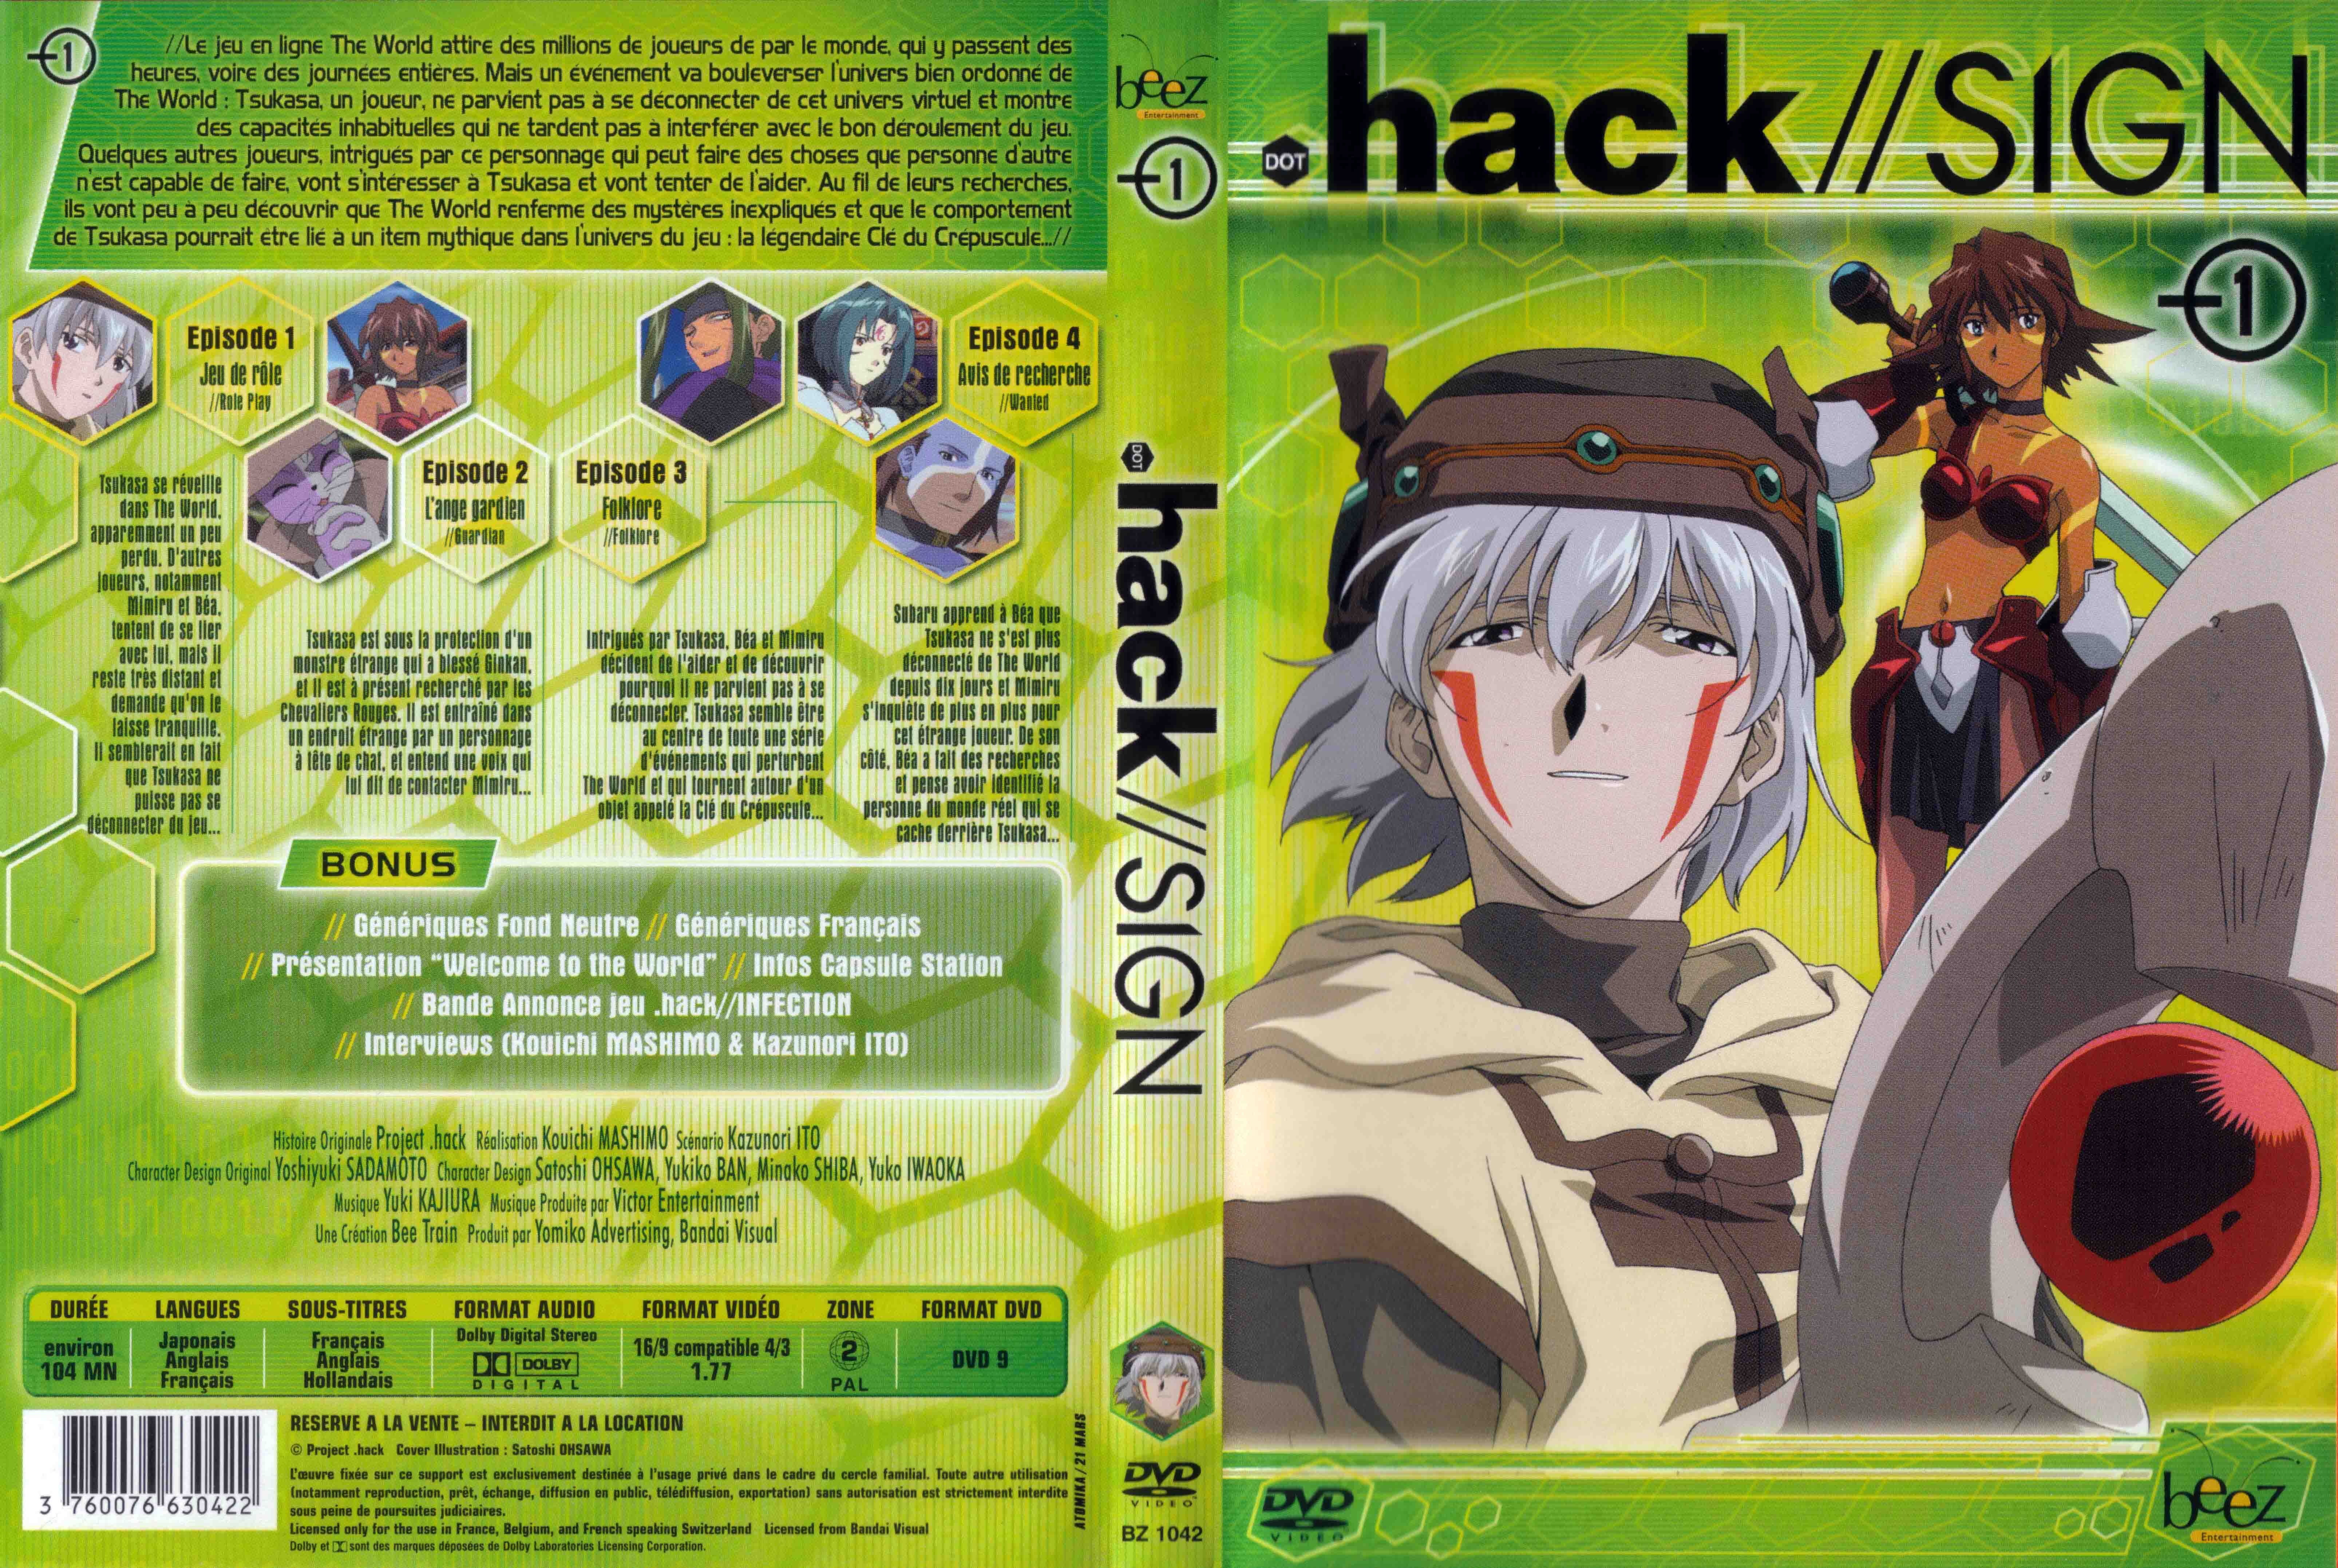 Jaquette DVD Hack vol 1